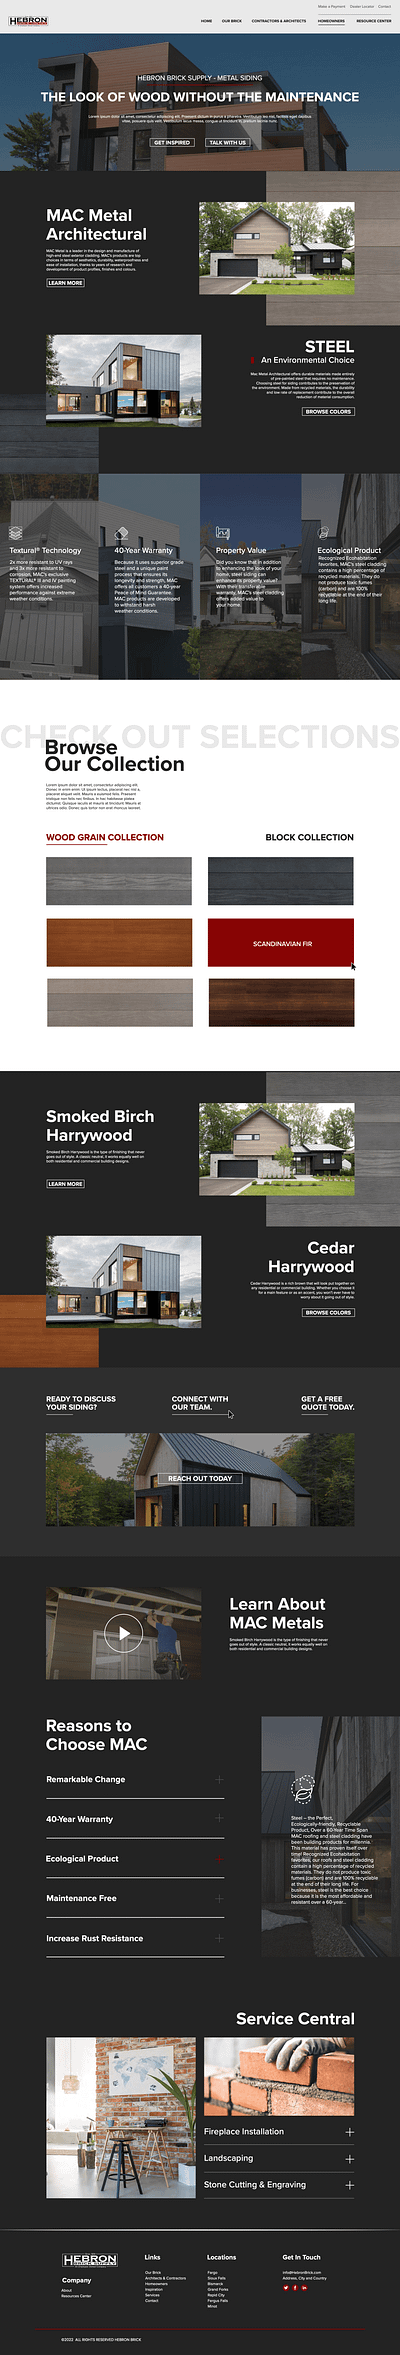 Hebron Brick Supply - Web Design web design